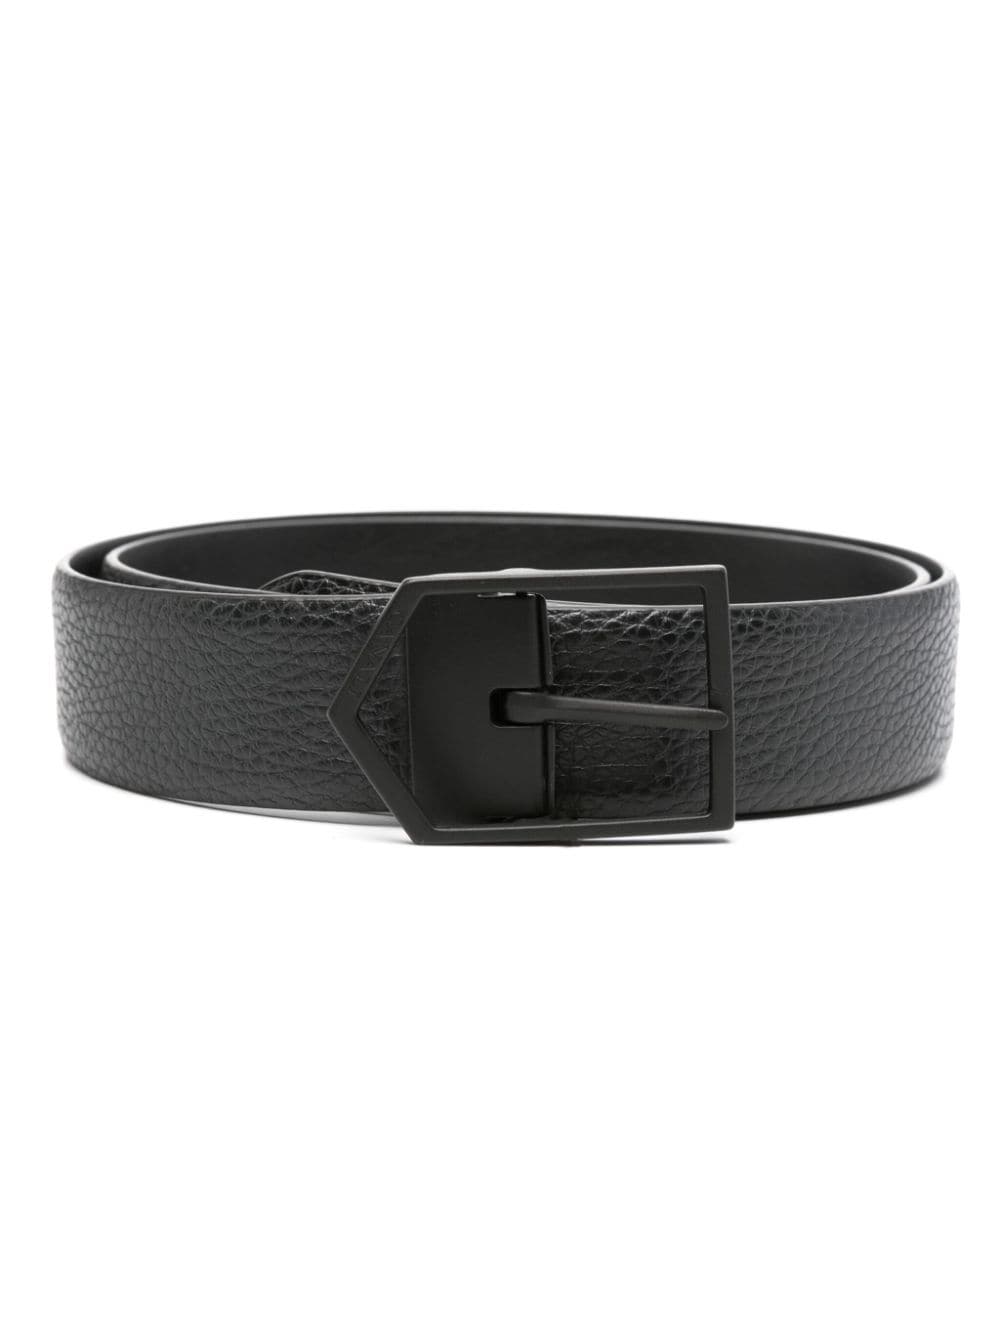 Canali pebbled leather belt - Black von Canali